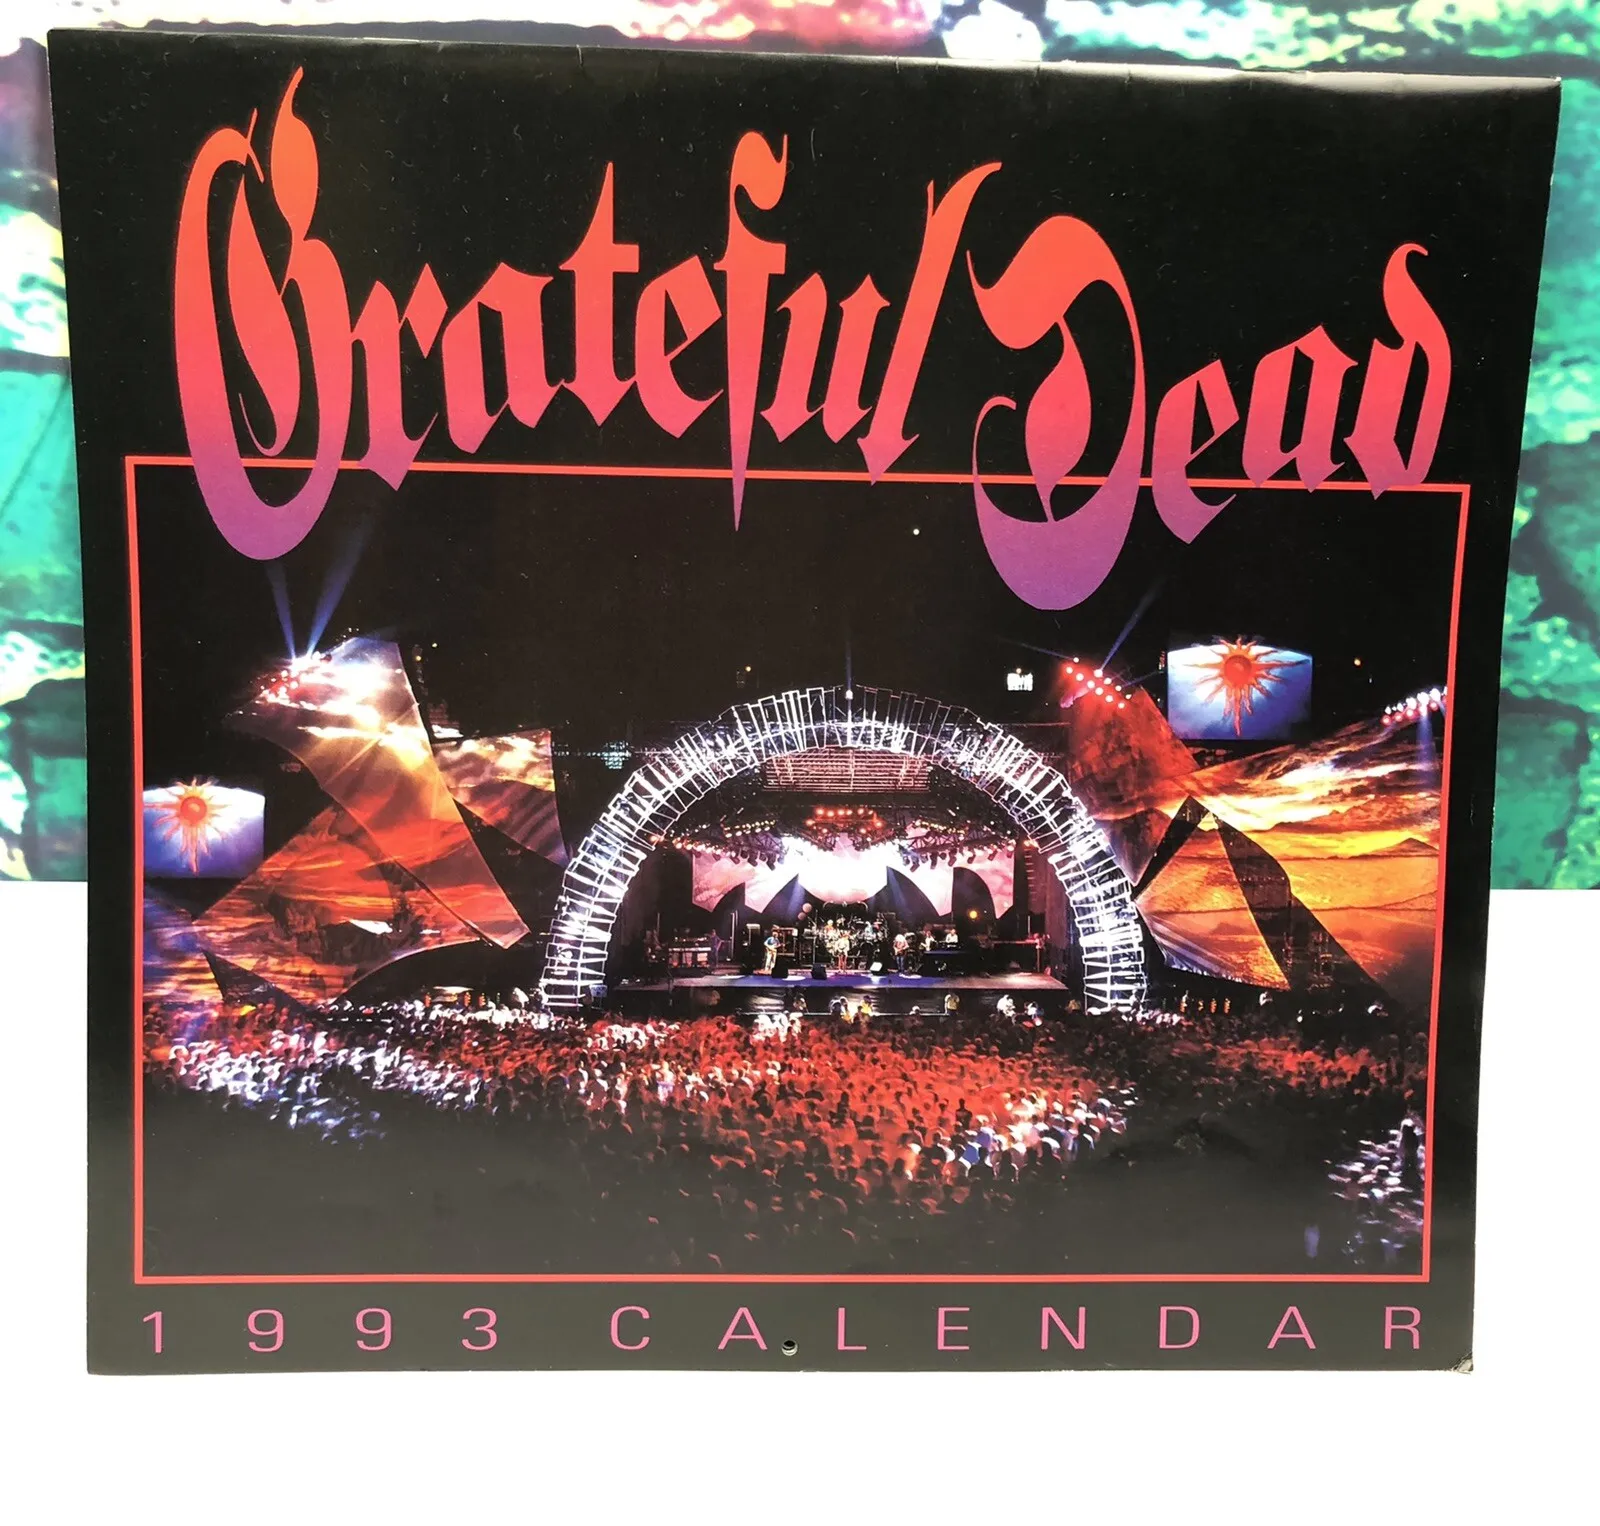 Grateful Dead - Vintage "official" 1993 Calendar - Very Good Condition!